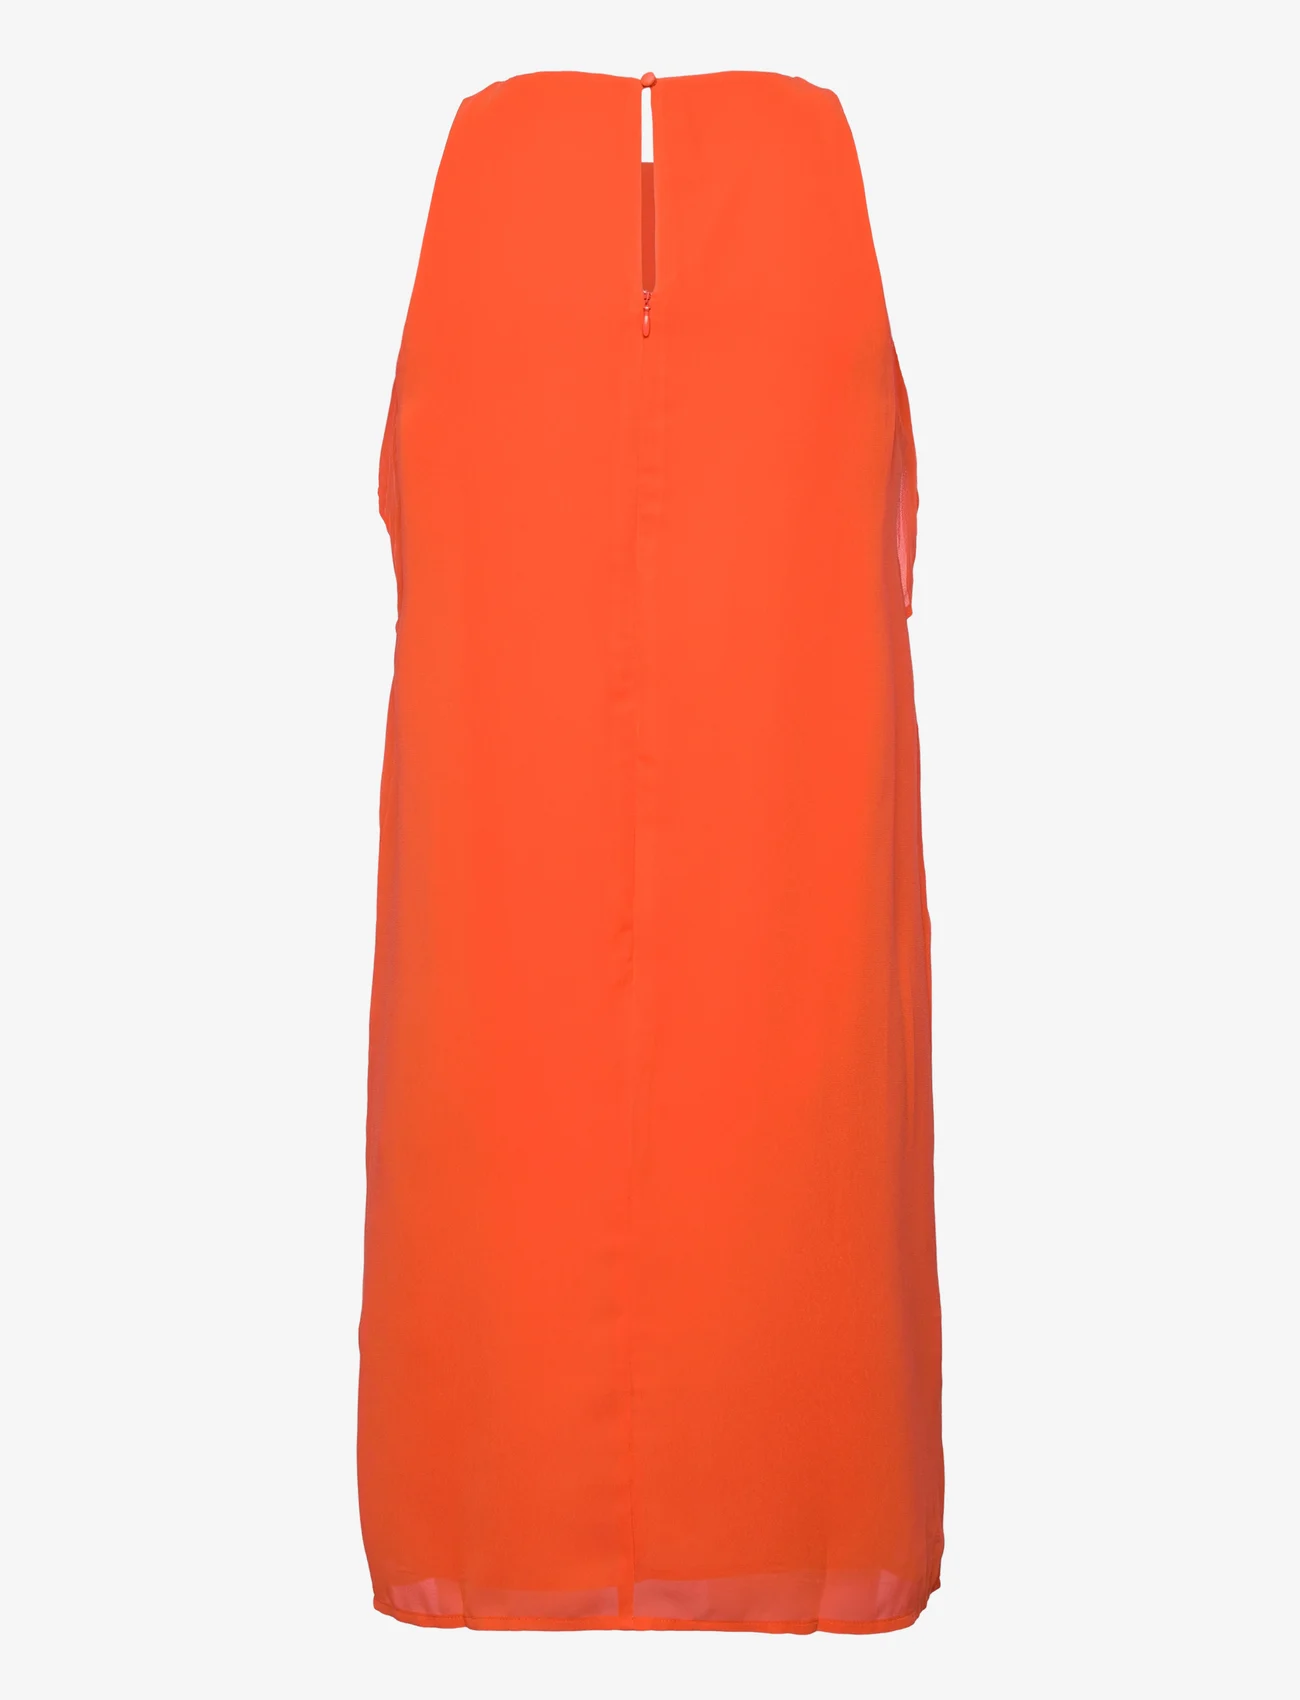 Esprit Casual - Dresses light woven - party dresses - bright orange - 1